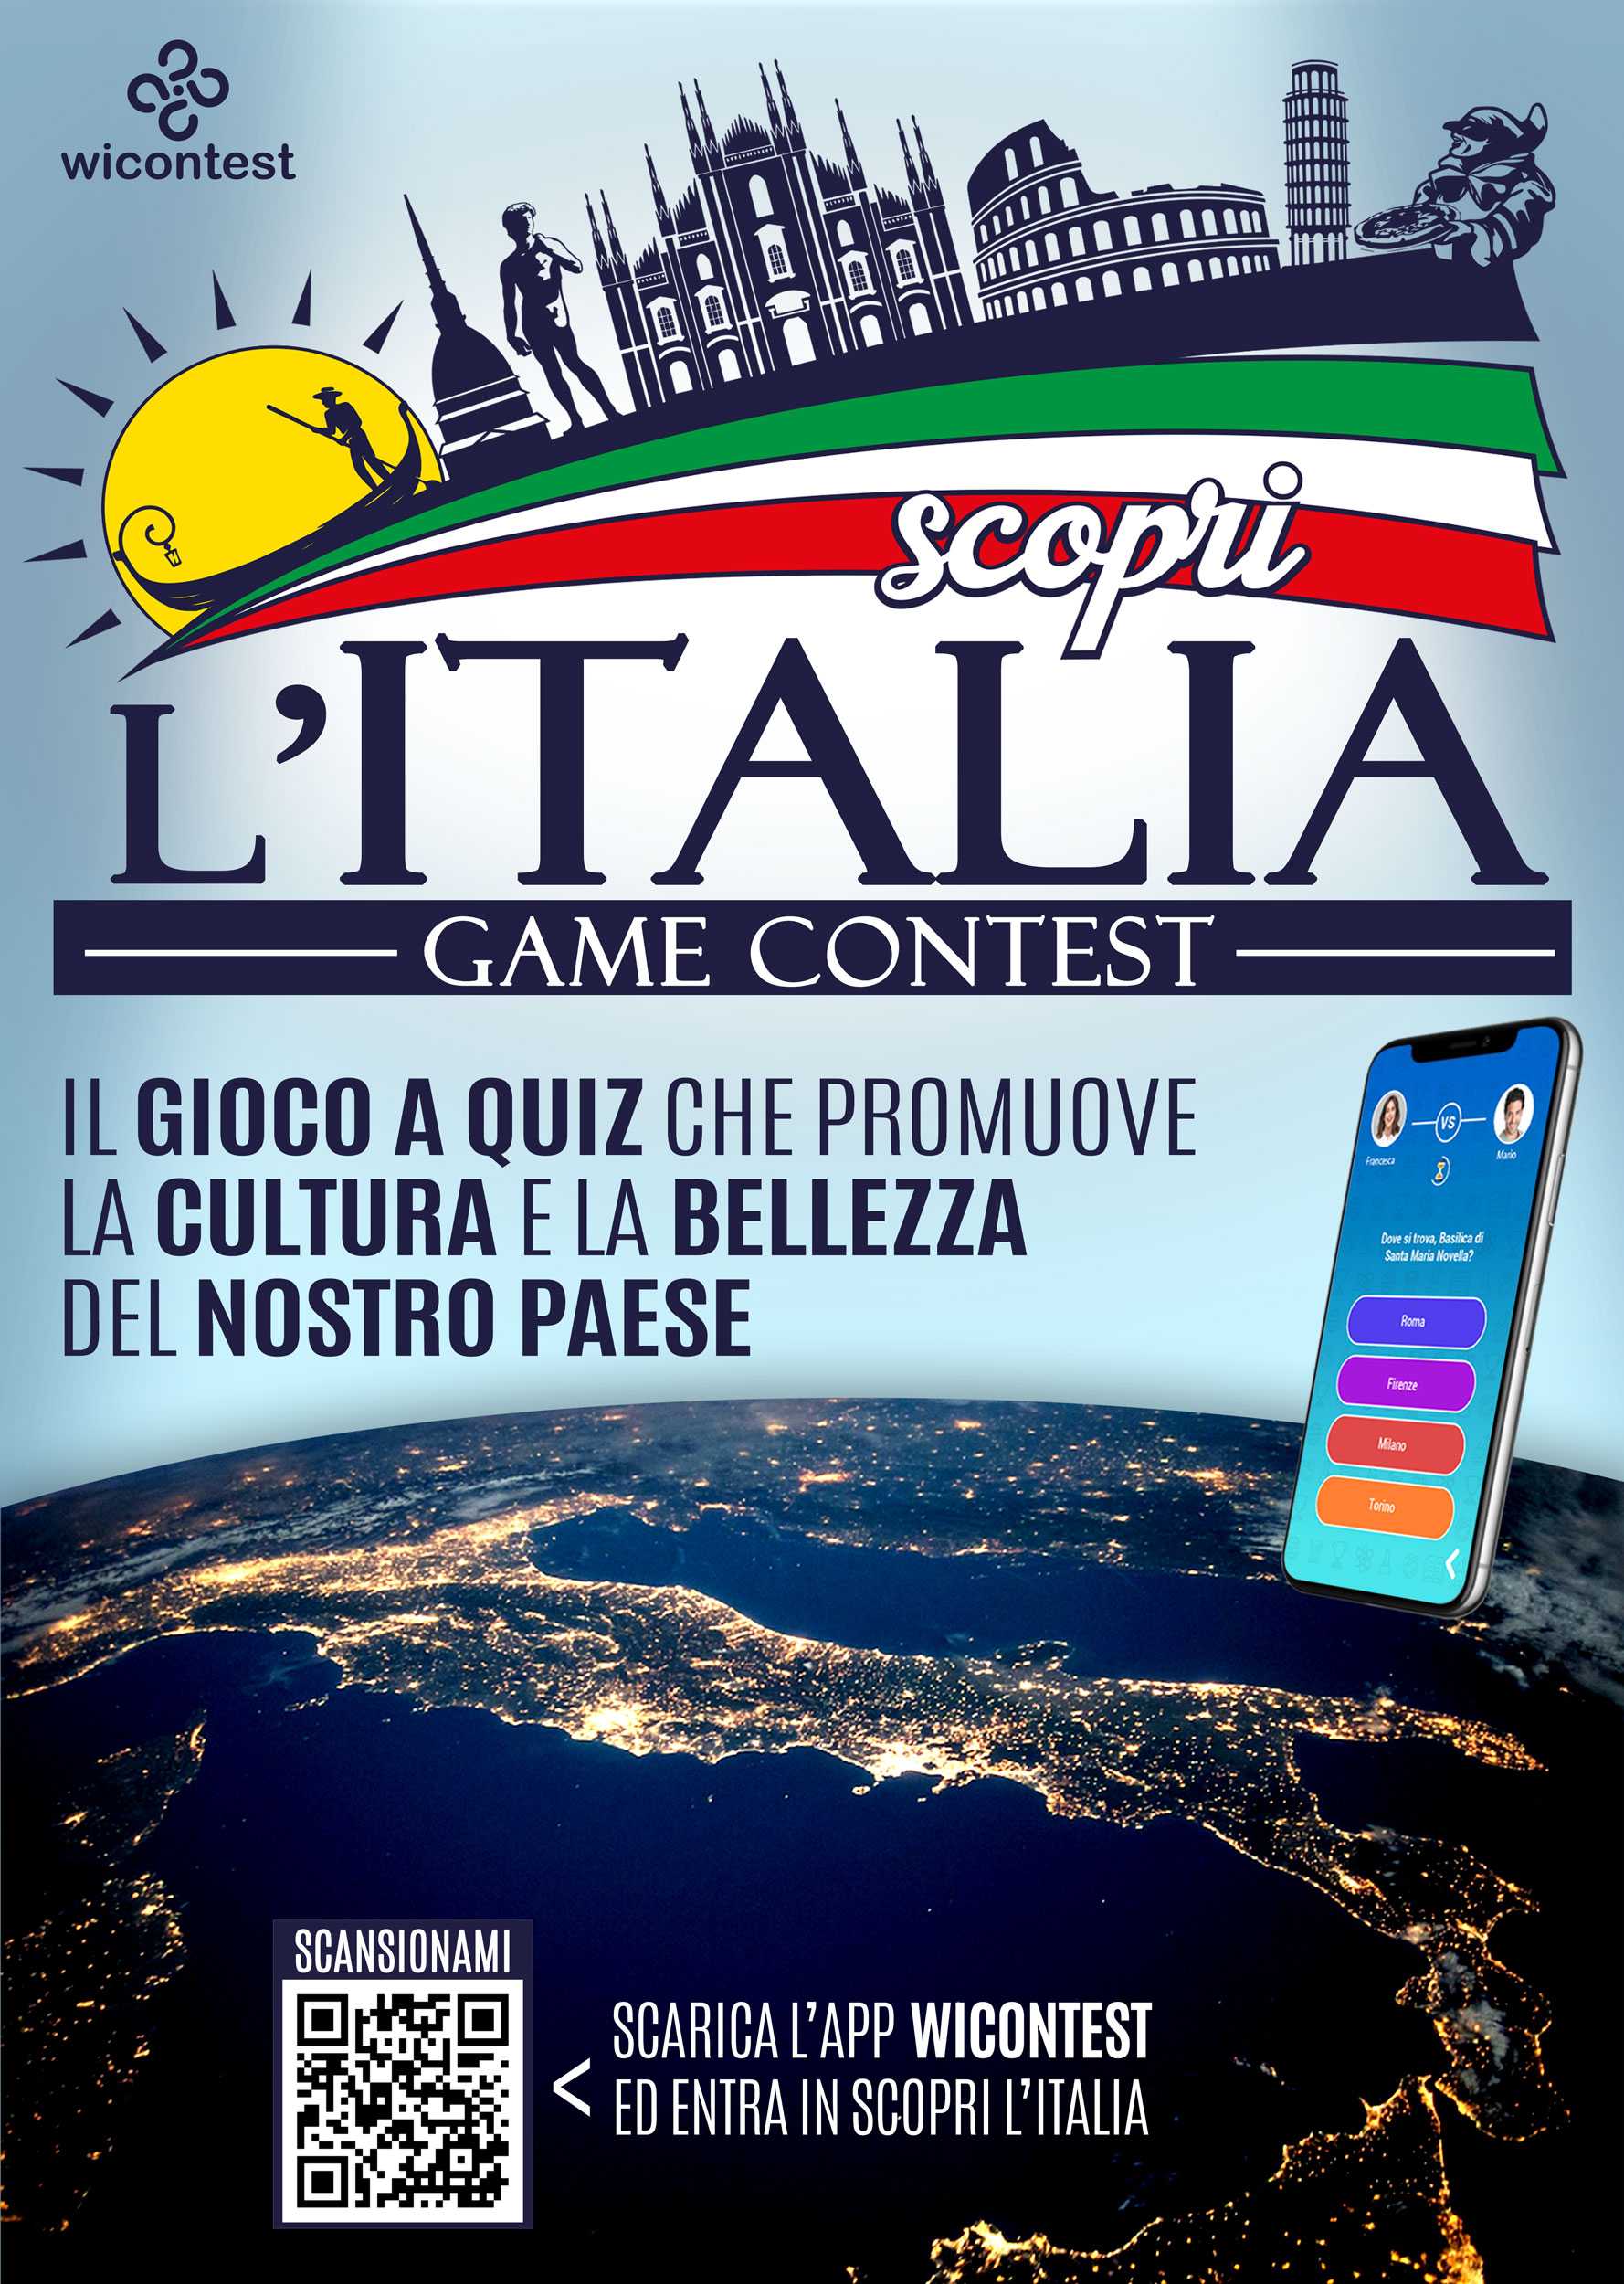 Scopri l’Italia - “Mussomeli Game Contest”.